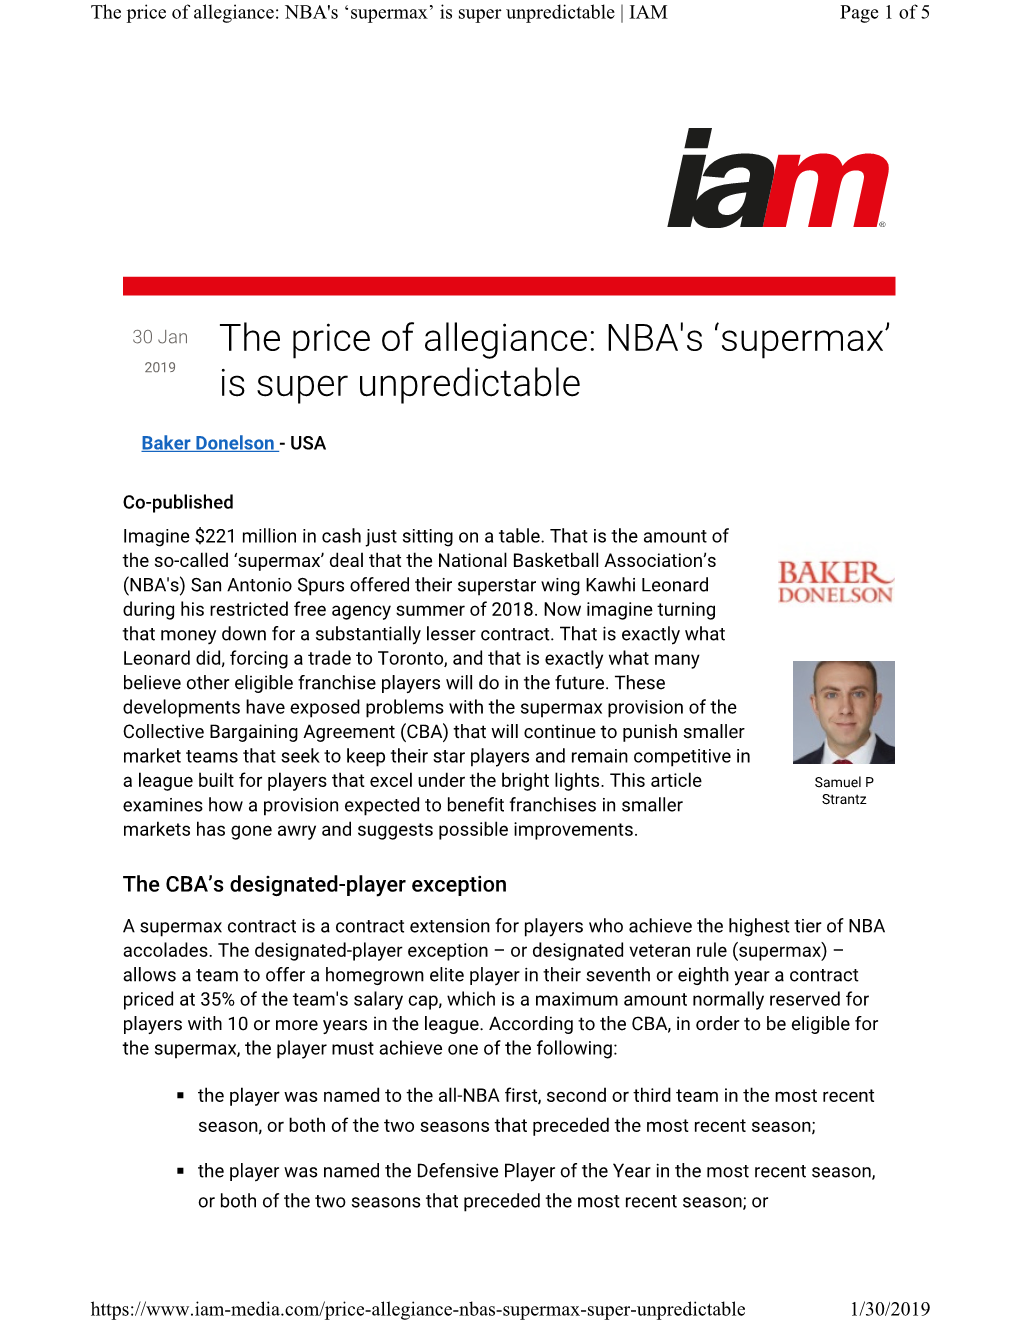 The Price of Allegiance: NBA's 'Supermax'